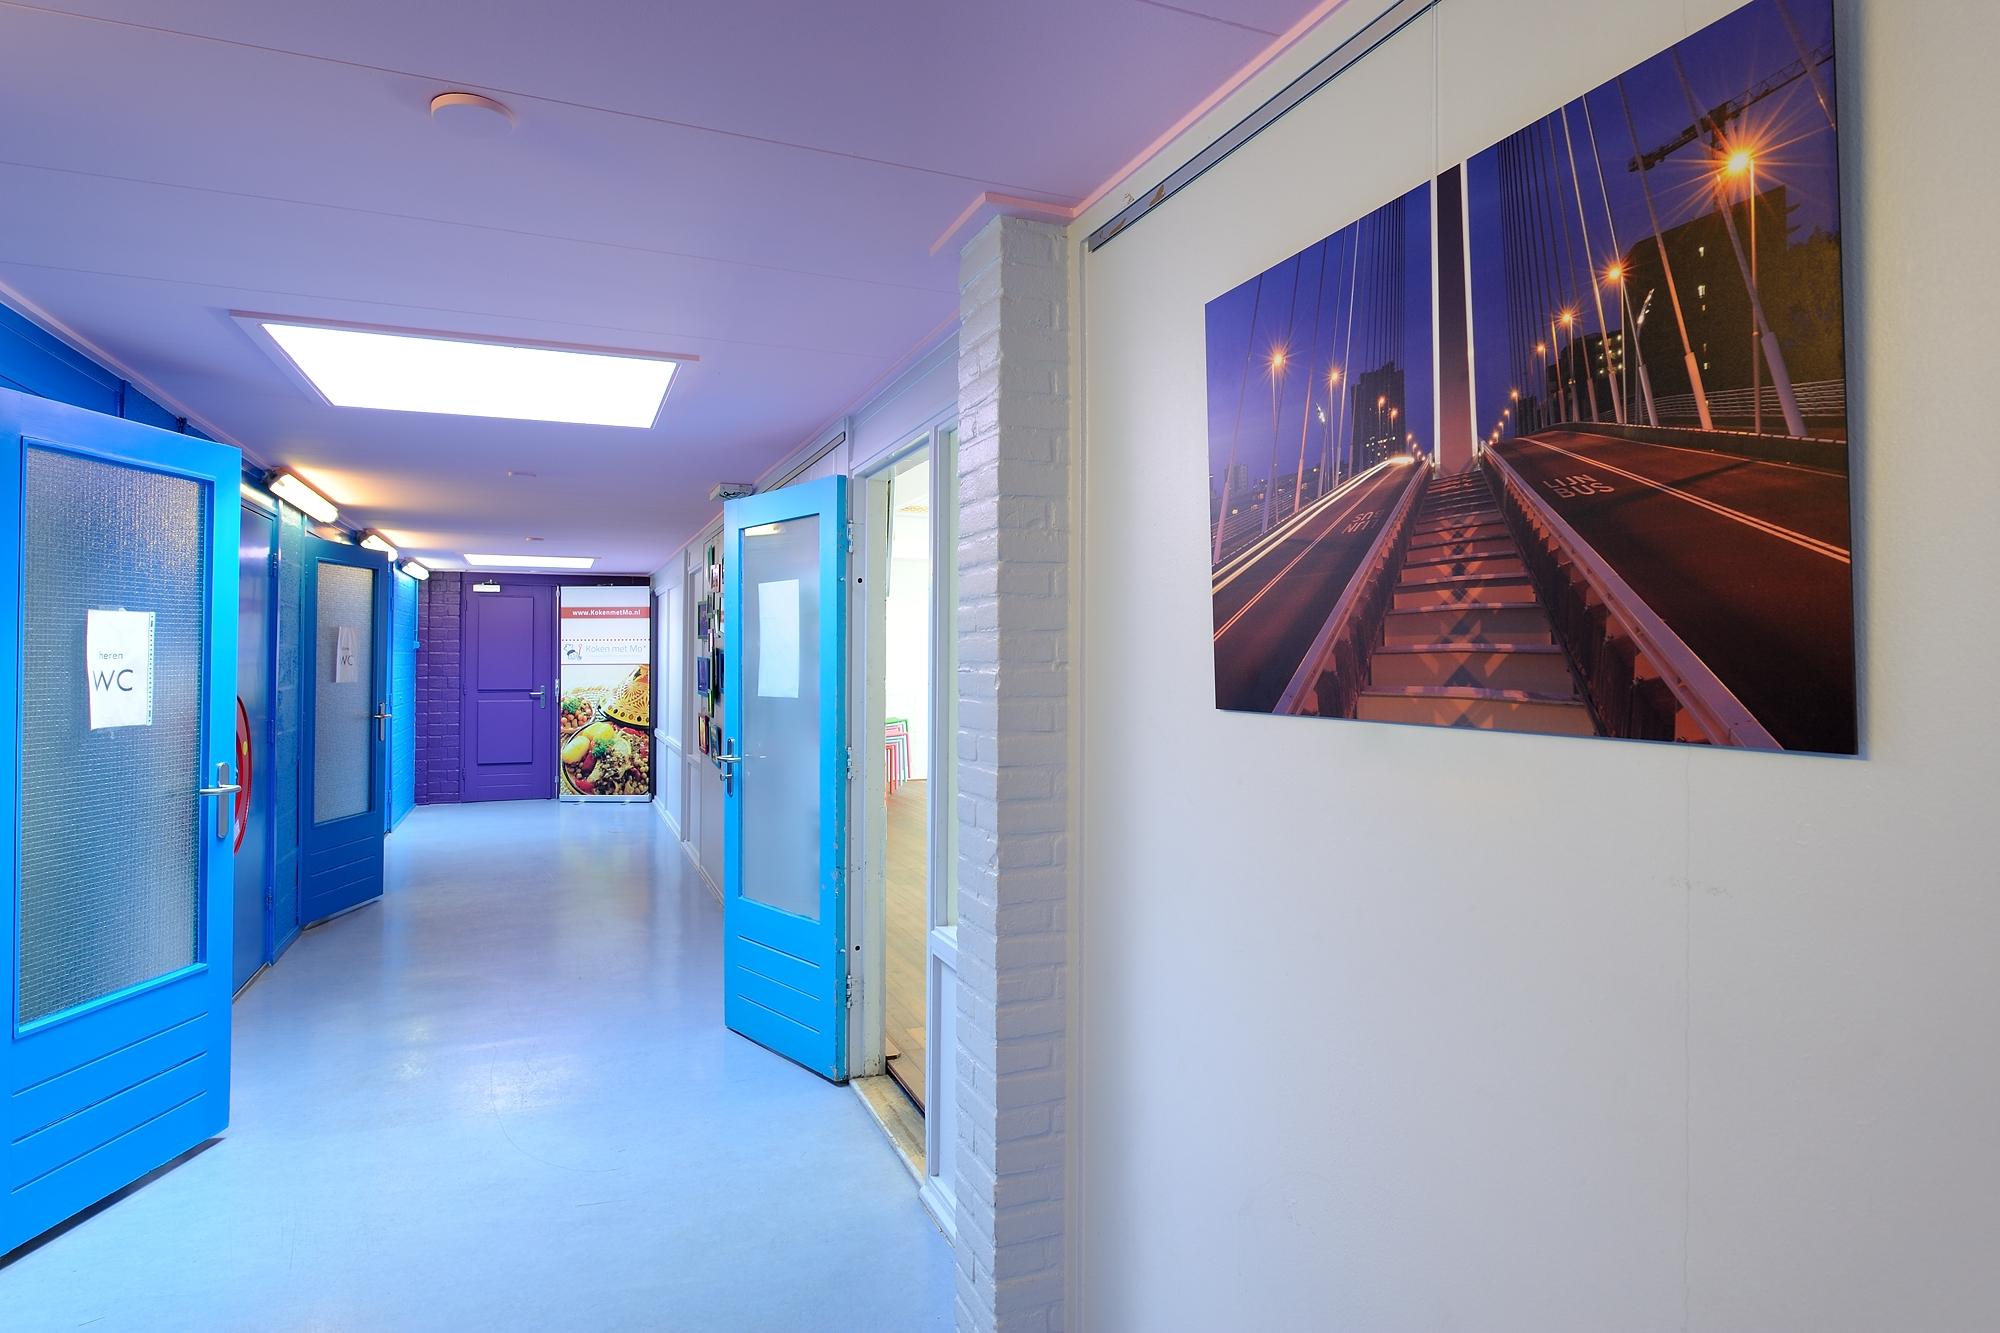 Wandbild im Flur eines Krankenhauses #wandgestaltung ©OhMyPrints